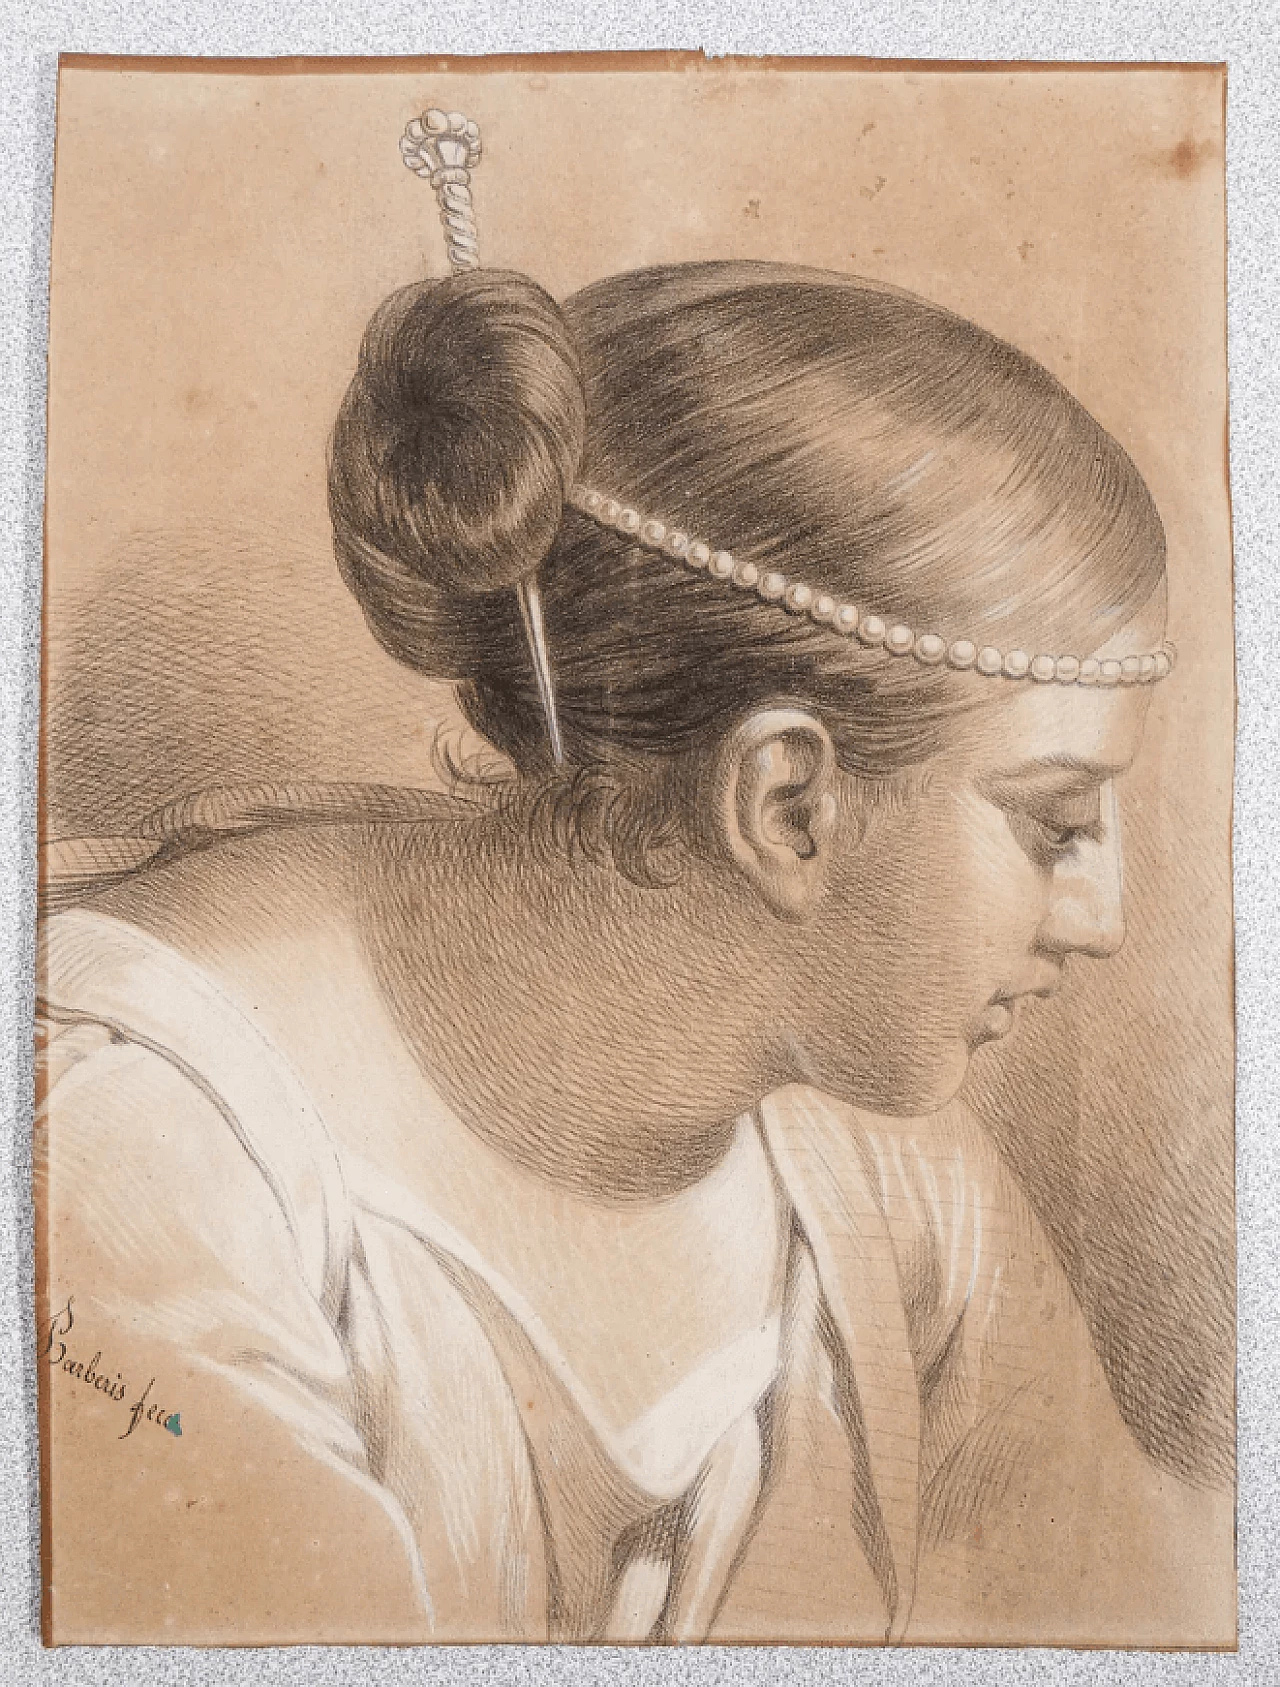 Antonio Barberis, Portrait of a Woman, pencil on paper, 19th century 3